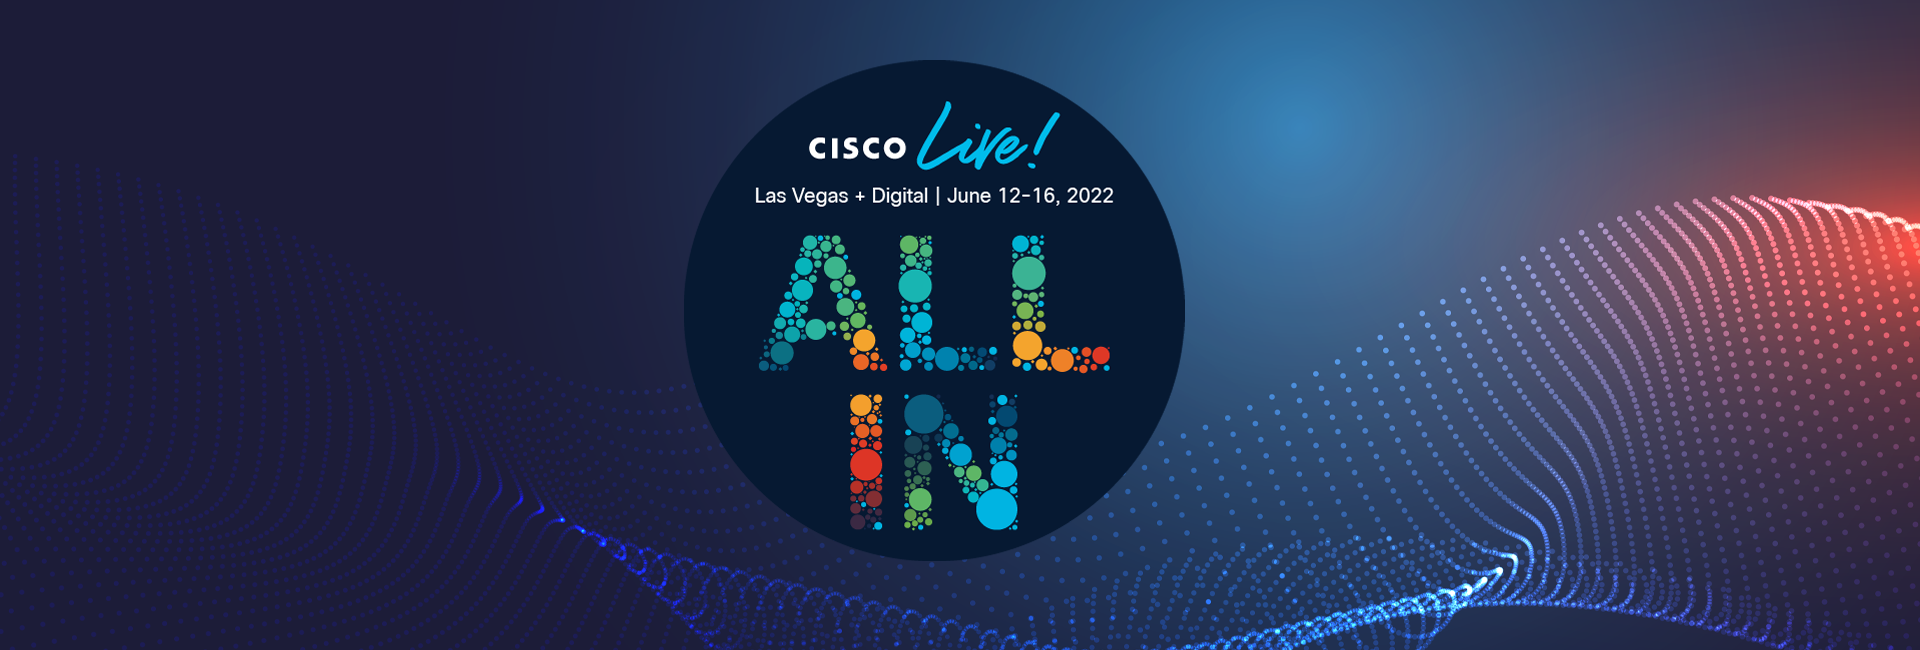 Get Ready for Digital Tokens at Cisco Live Las Vegas 2022